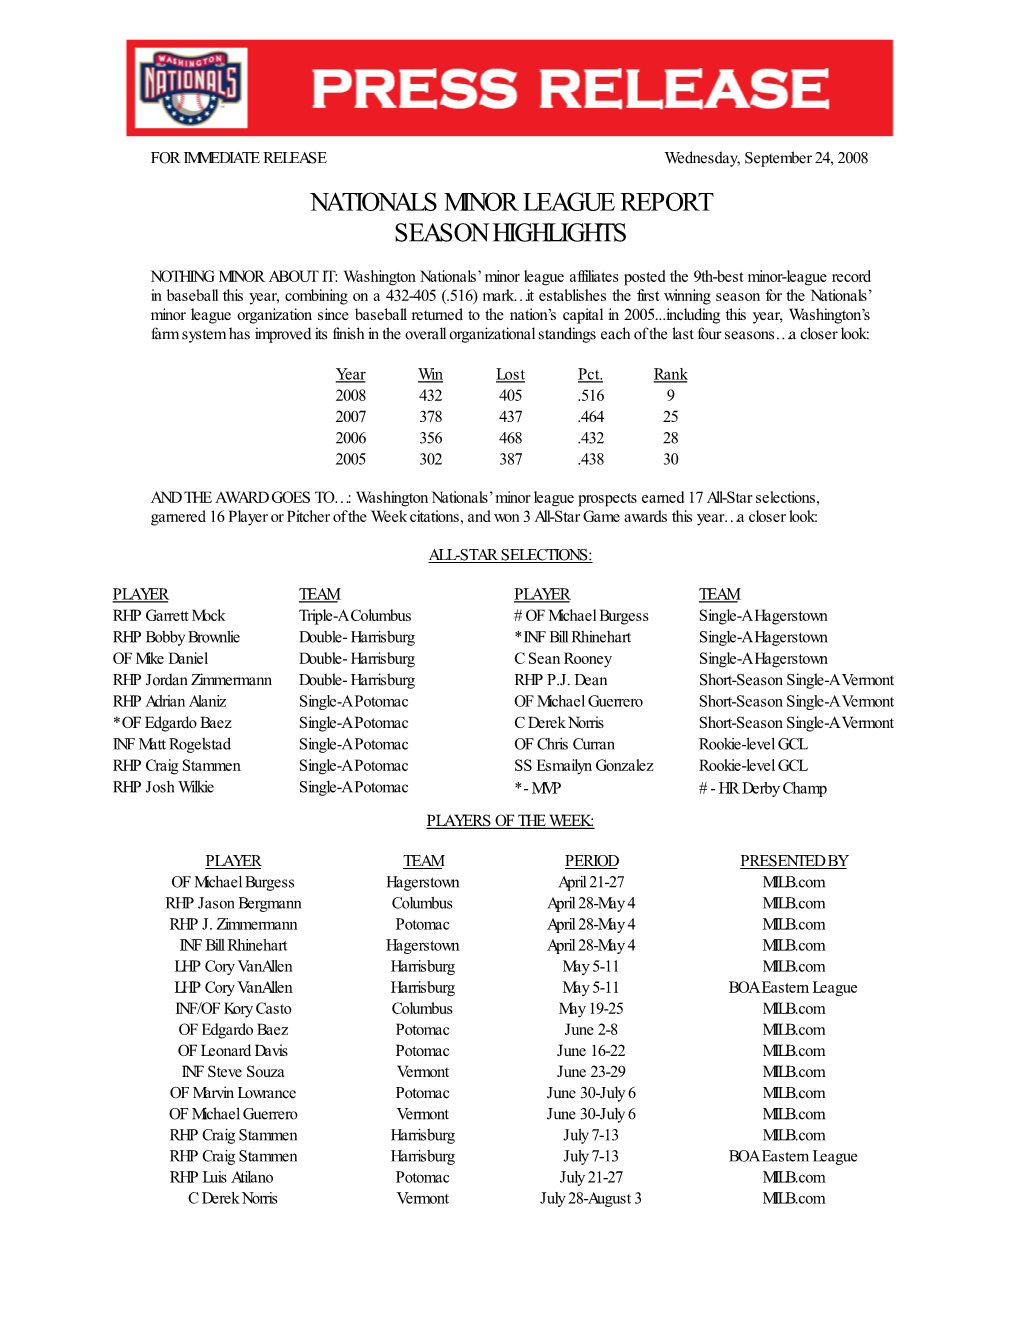 Nationals Minor League Report Season Highlights